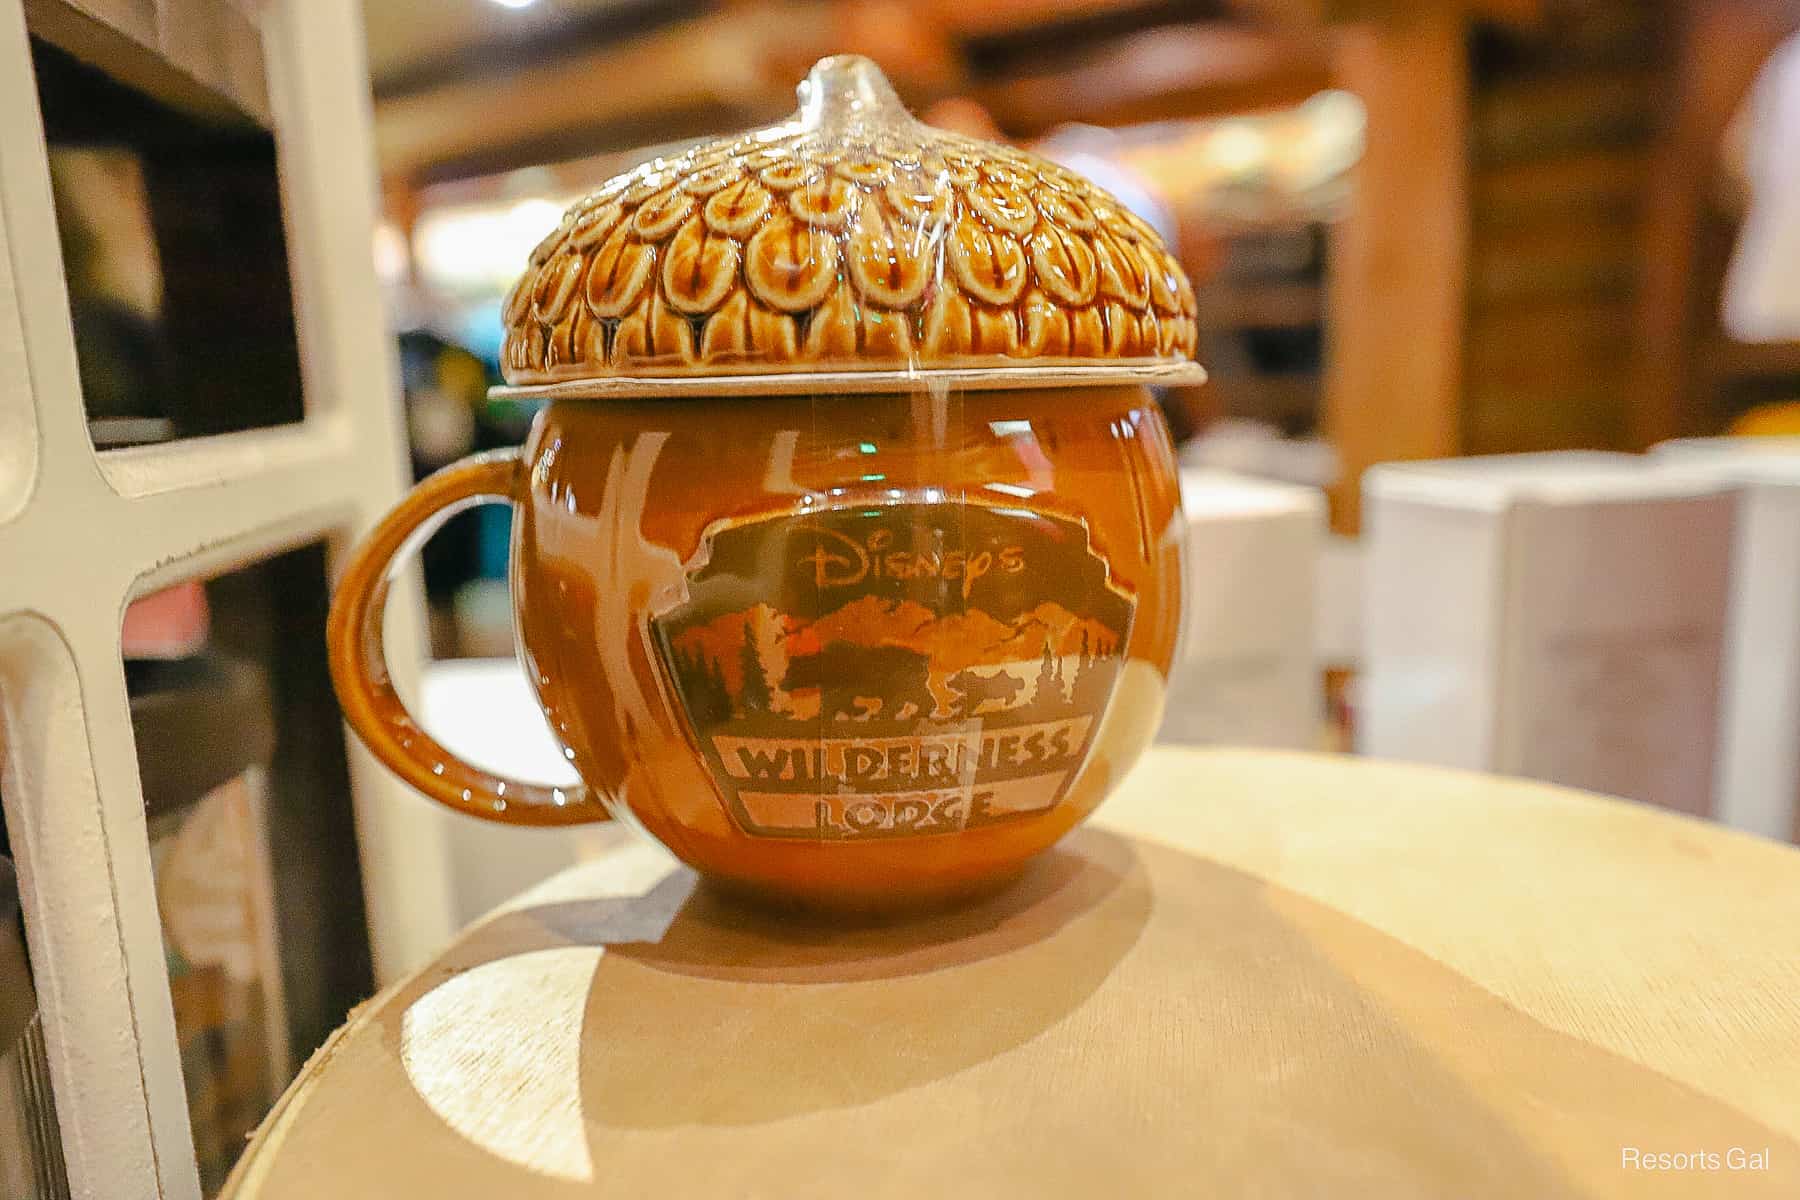 the logo of the Wilderness Lodge on the acorn mug 